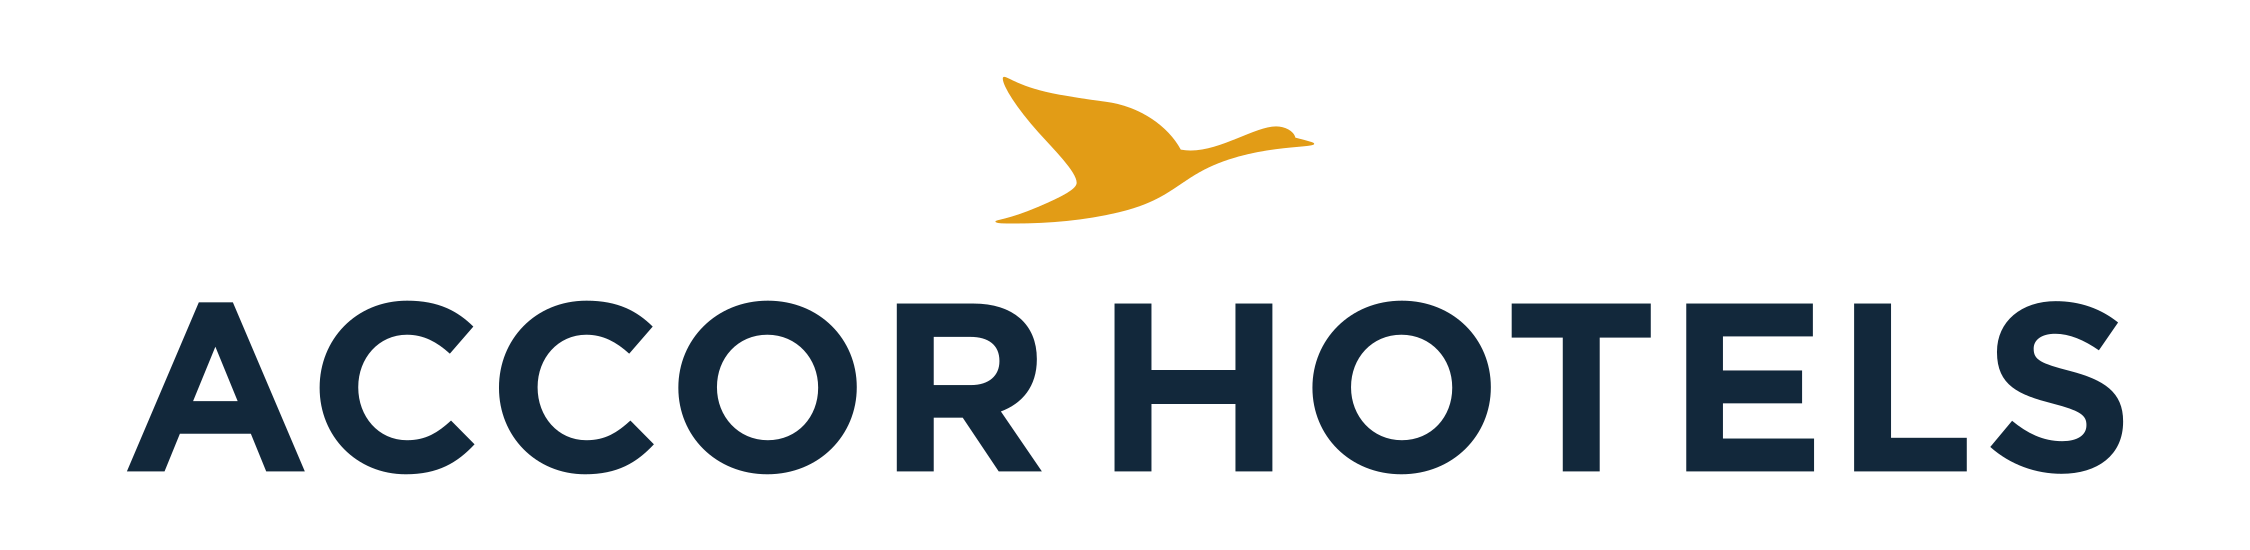 AccorHotels_Logo_2016.svg.png